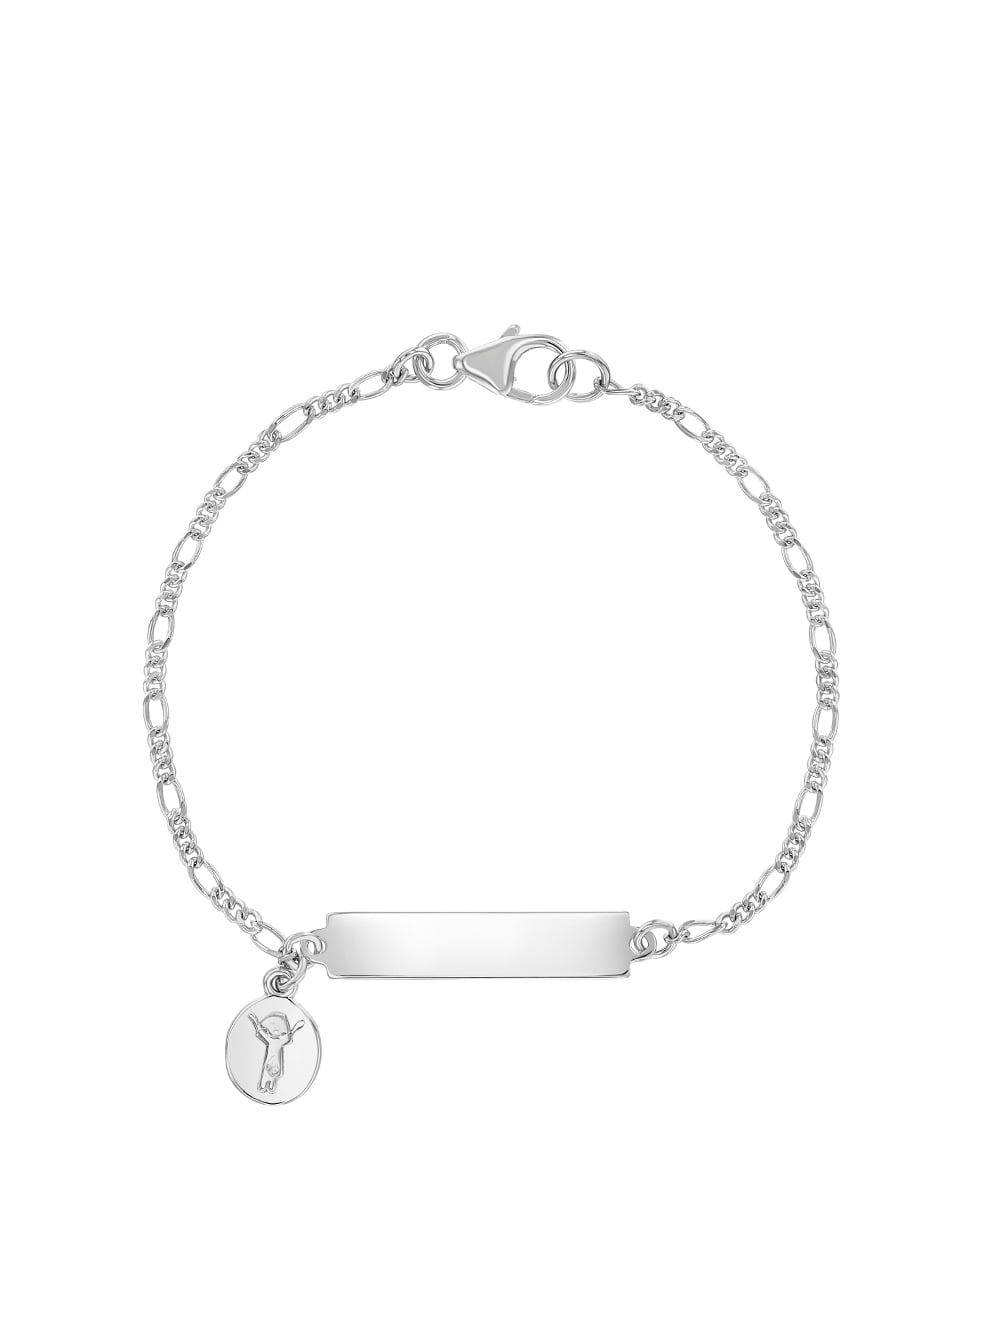 SOLID 925 Sterling Silver Elegant Bead w 36pcs Sparkling Cz For Charm Bracelet 